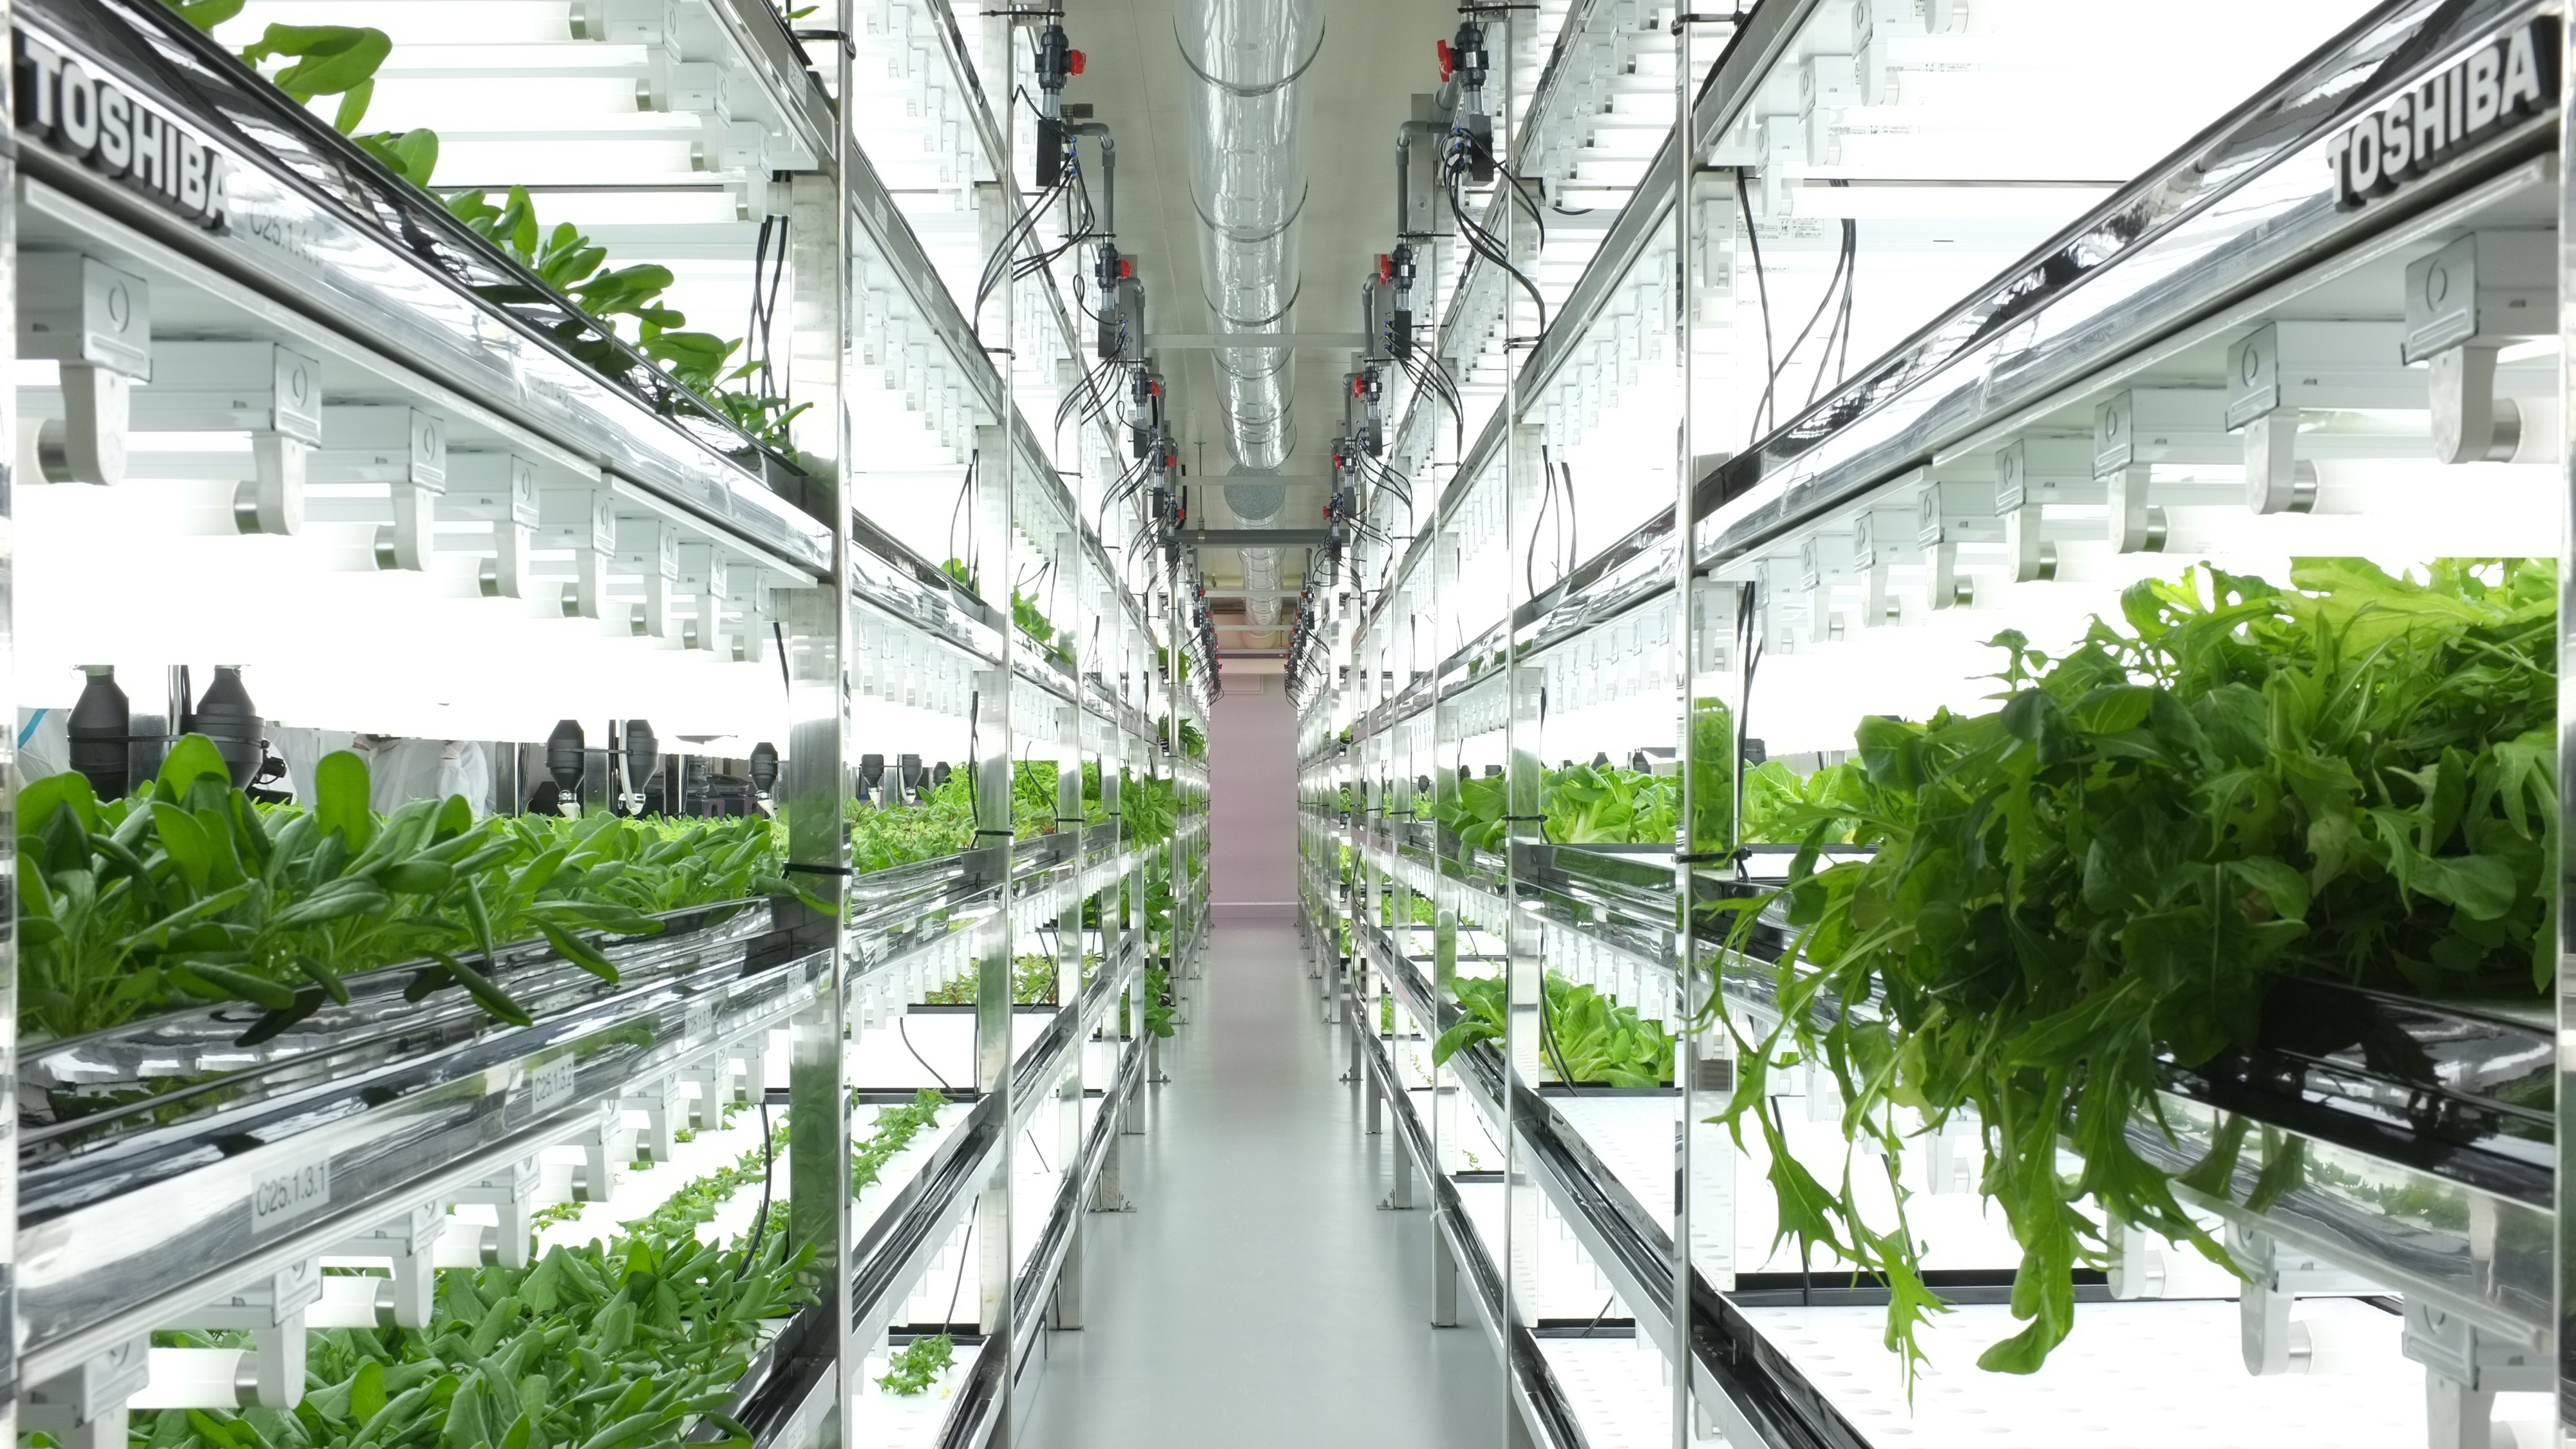 Toshiba indoor lettuce farm